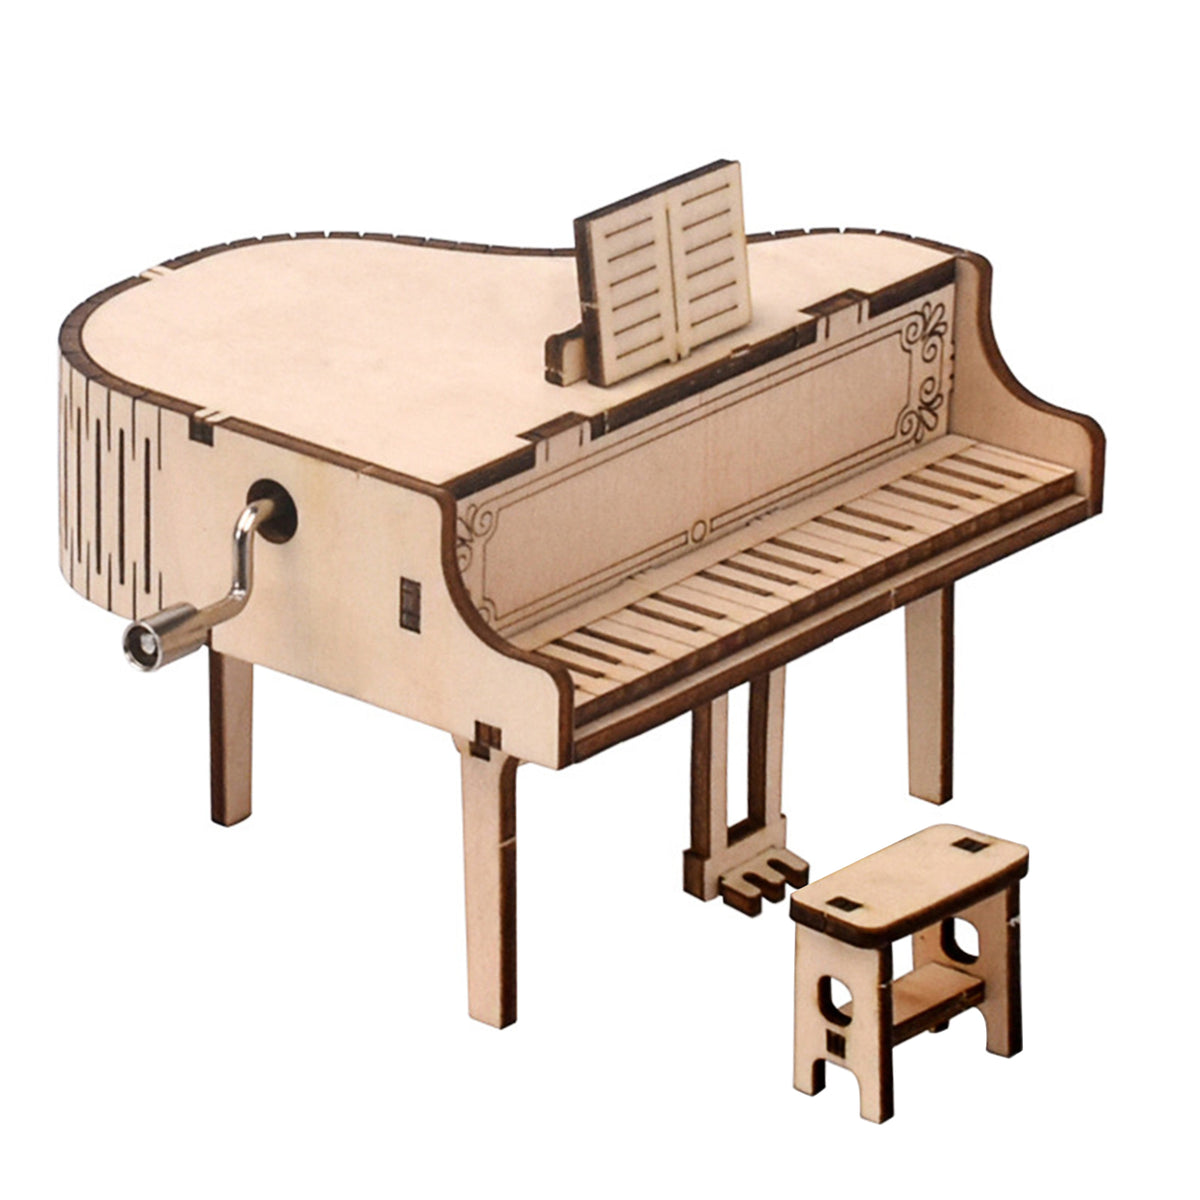 3D Wooden Puzzle Piano Music Box,3D Puzzles DIY Kits Hand Crank Music Box(Grandpiano)